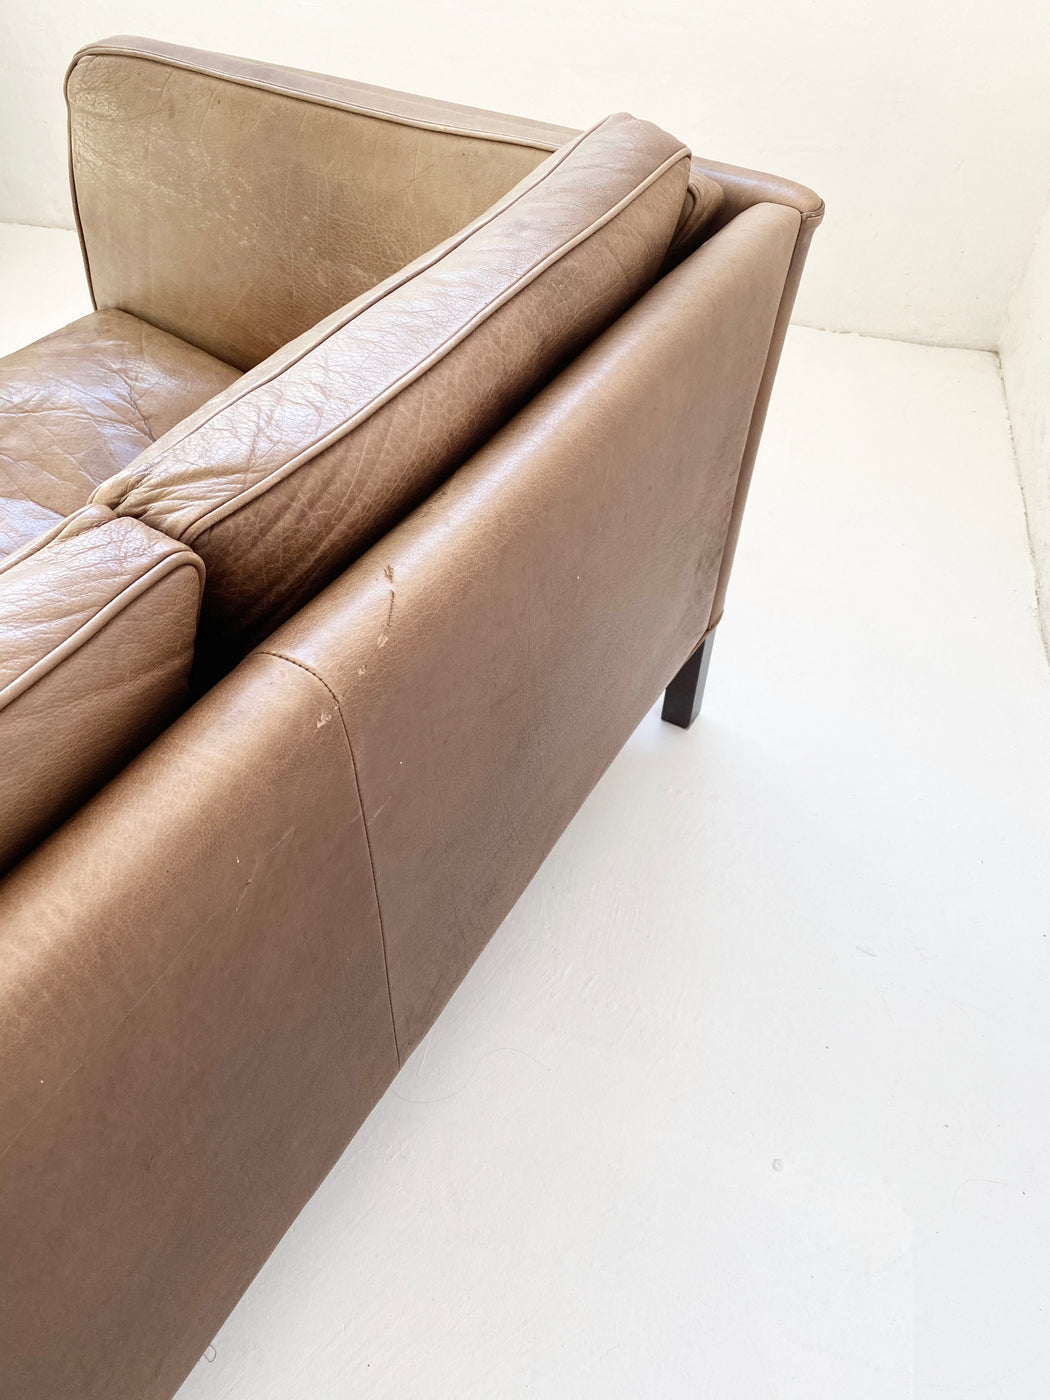 Stouby 'Oslo' Leather Sofa